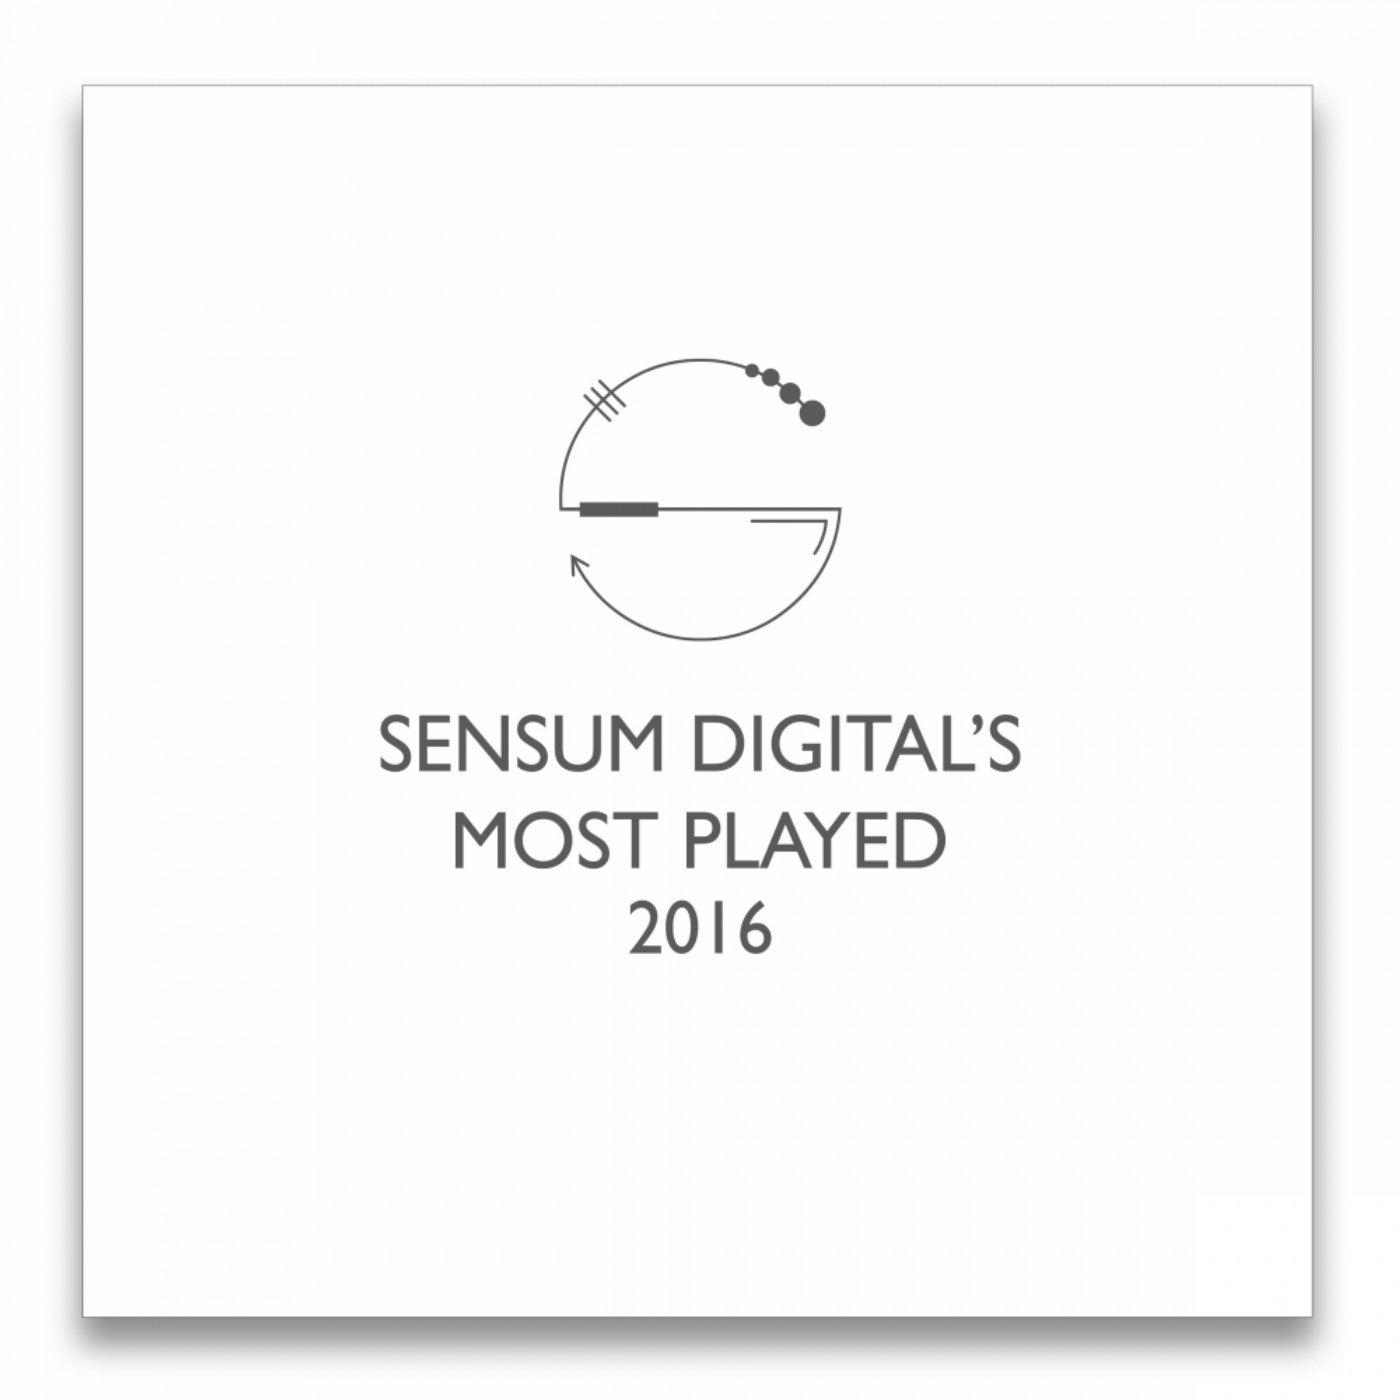 Sensum Digital's Most Played 2016